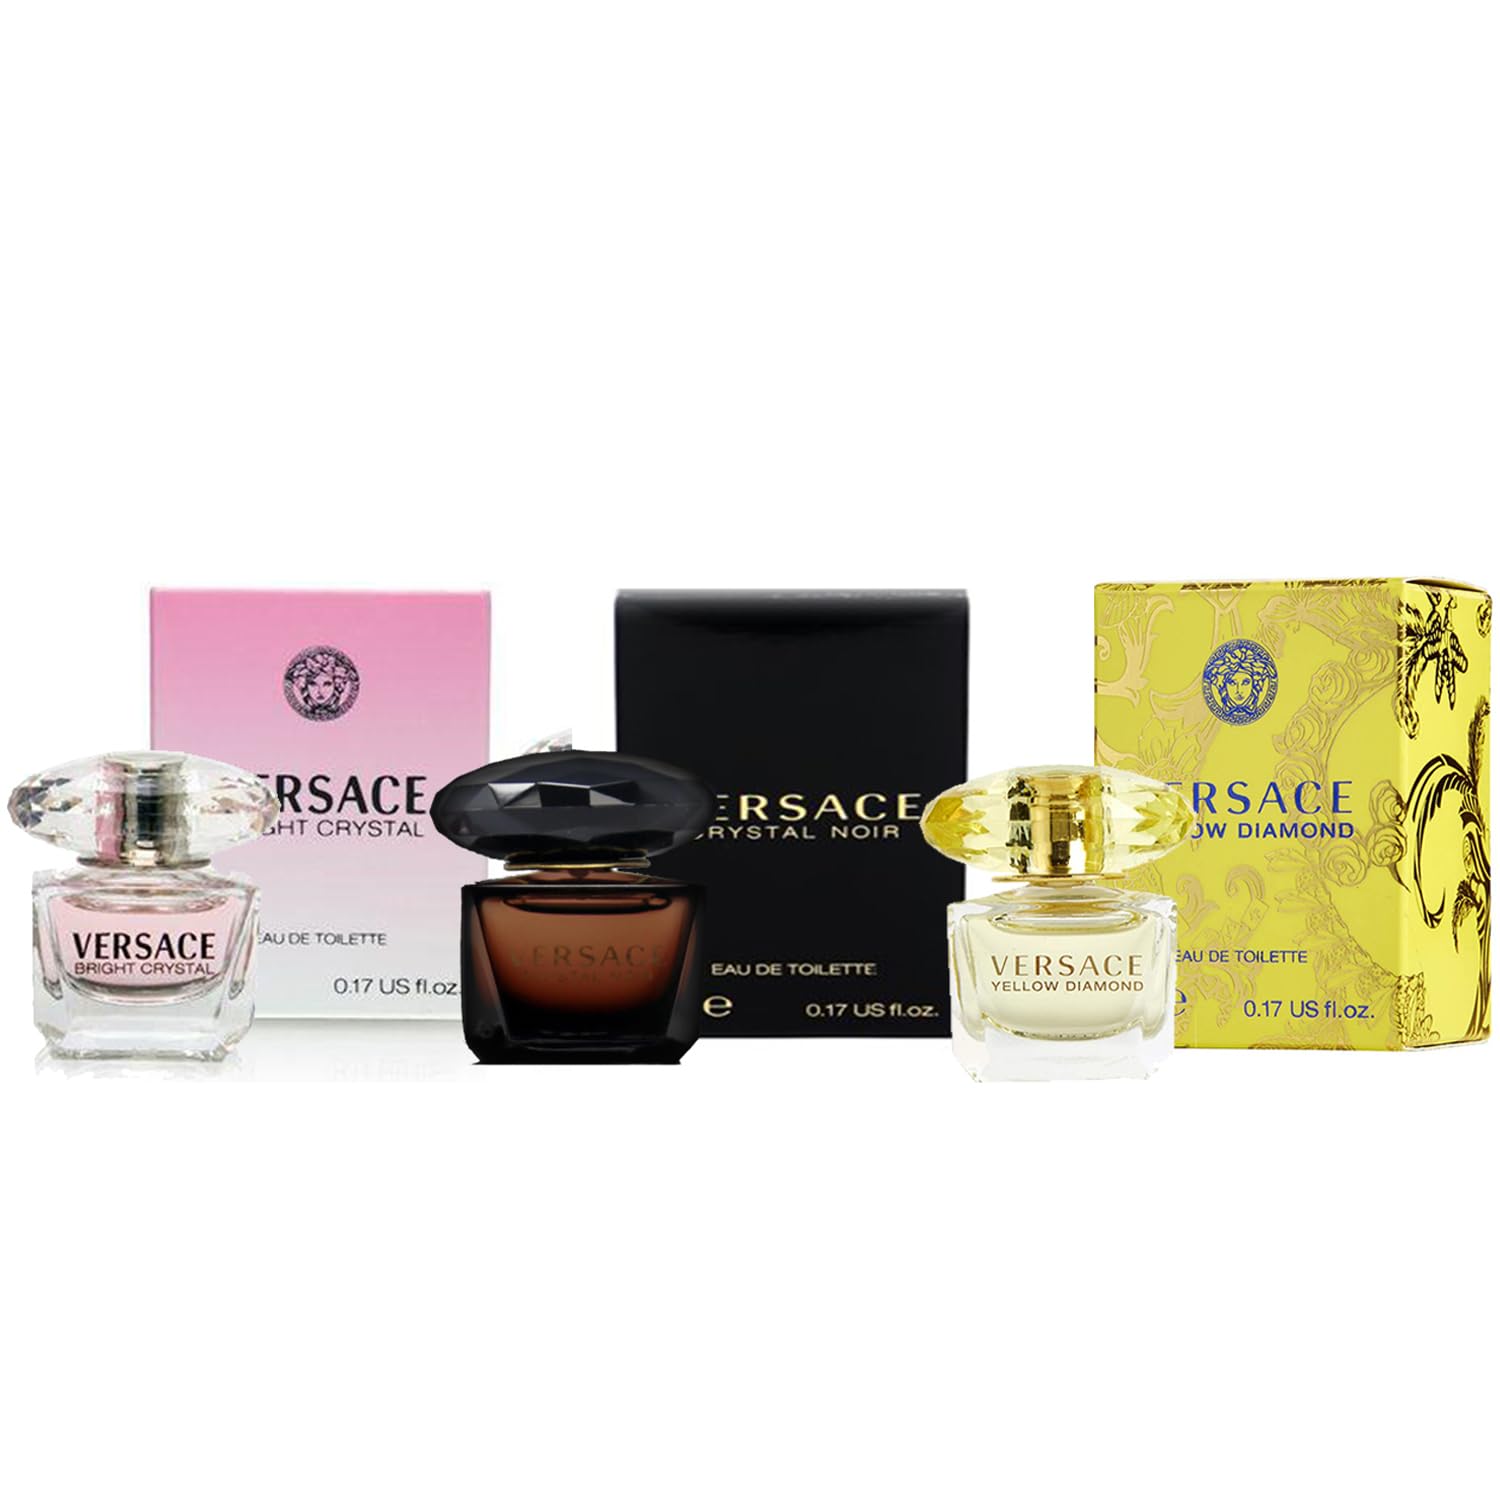 perfume gift sets